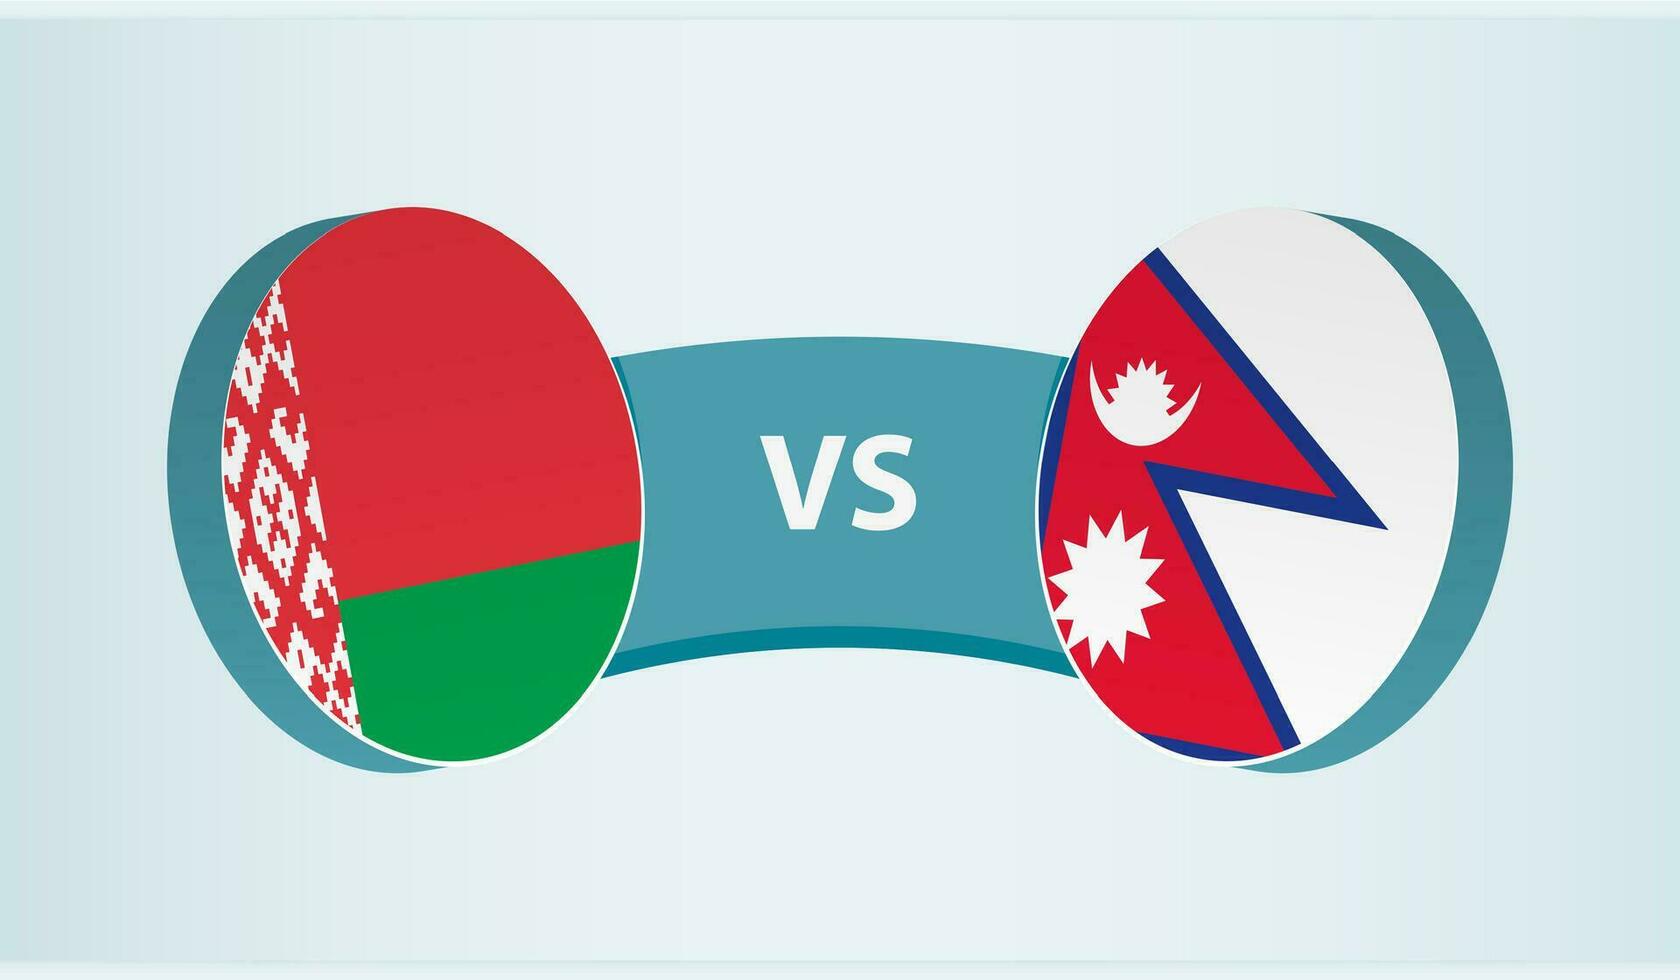 Belarus versus Nepal, team sports competition concept. vector